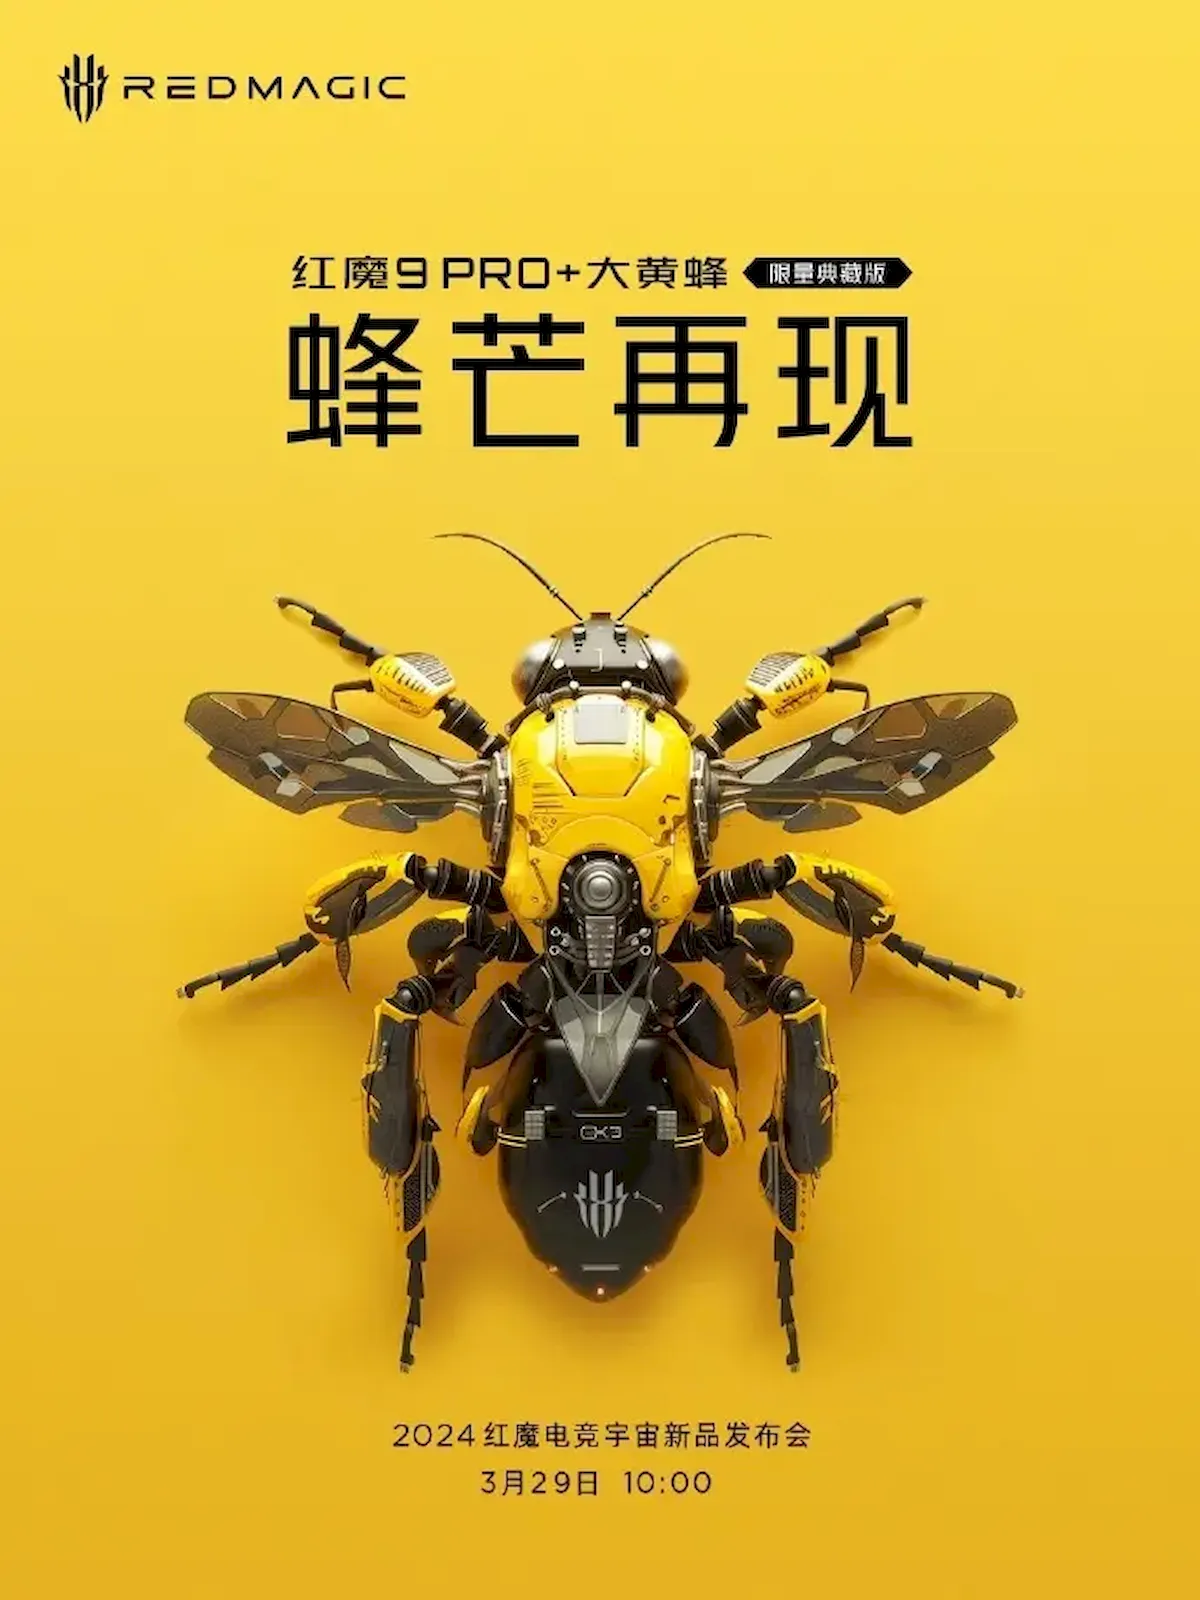 RedMagic 9 Pro+ Bumblebee Transformers LE será lançado em 29 de março